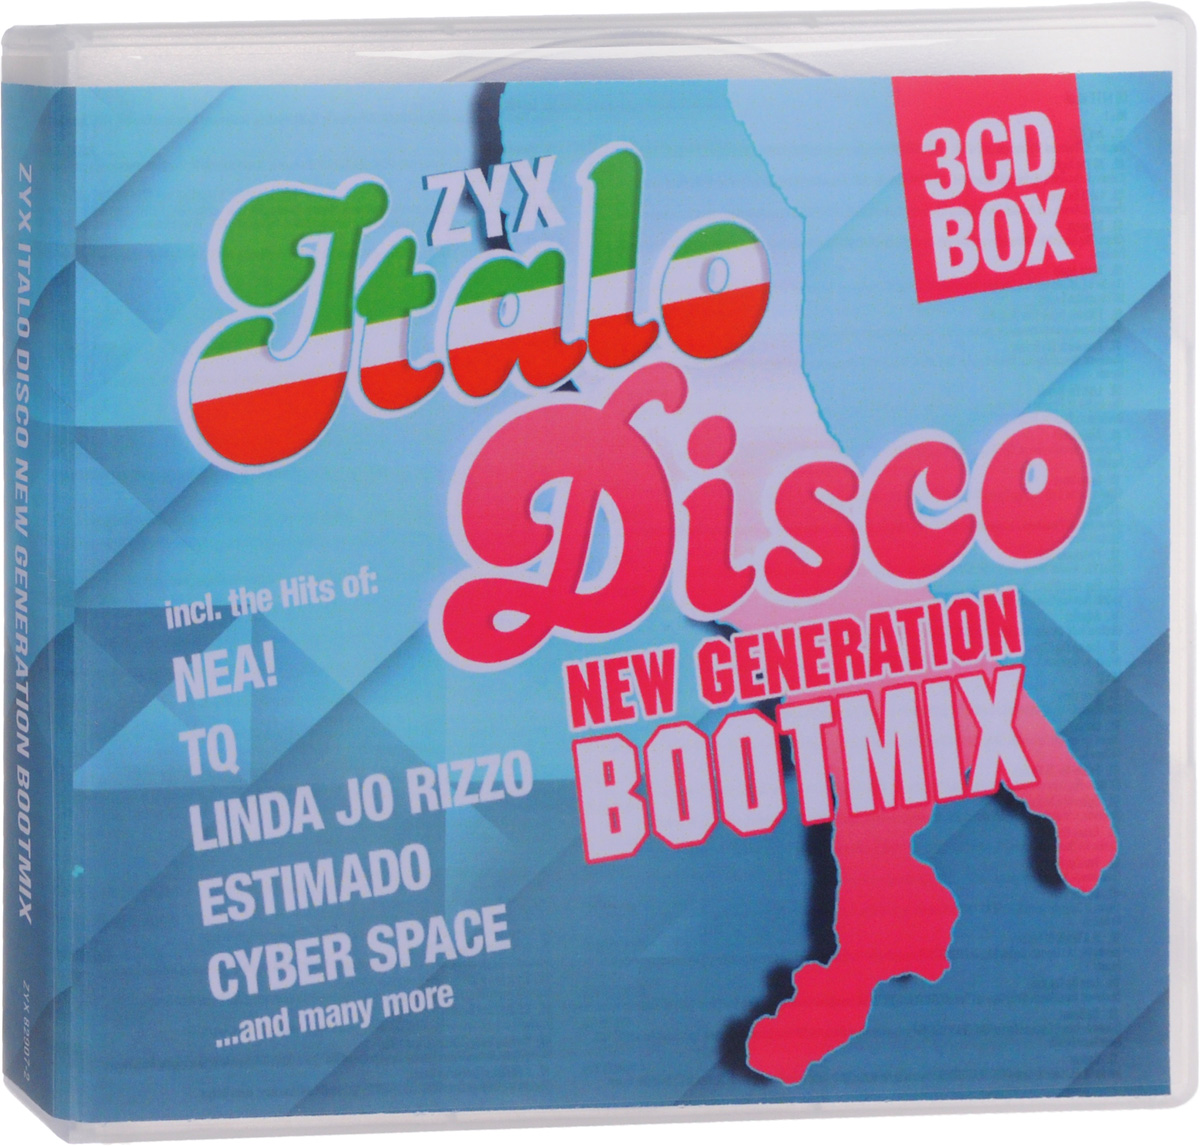 Zyx Italo Disco New Generation Boot Mix (3 CD)